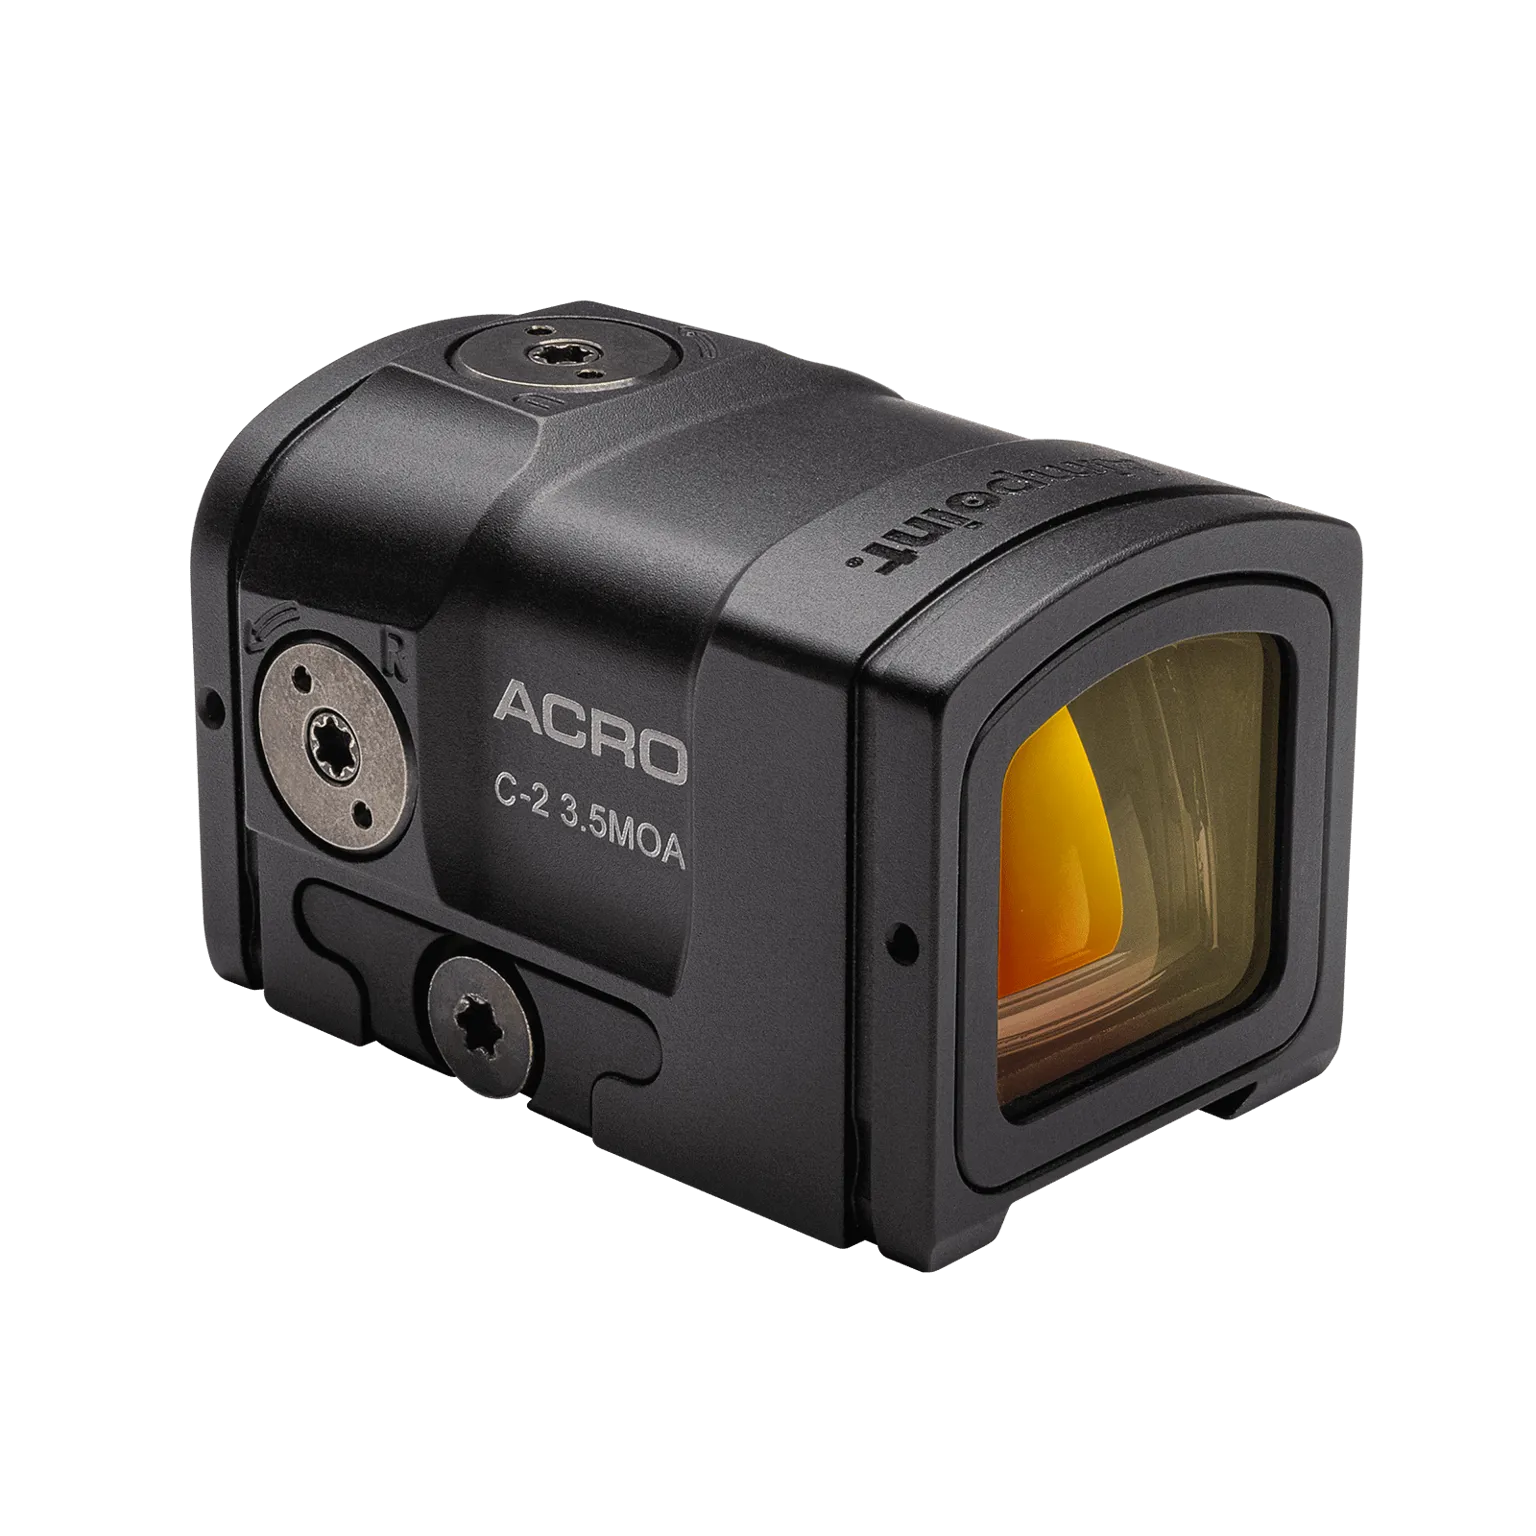 Acro C-2™ 3.5 MOA - Rotpunktvisier mit integrierter Acro™ Schnittstelle - 3